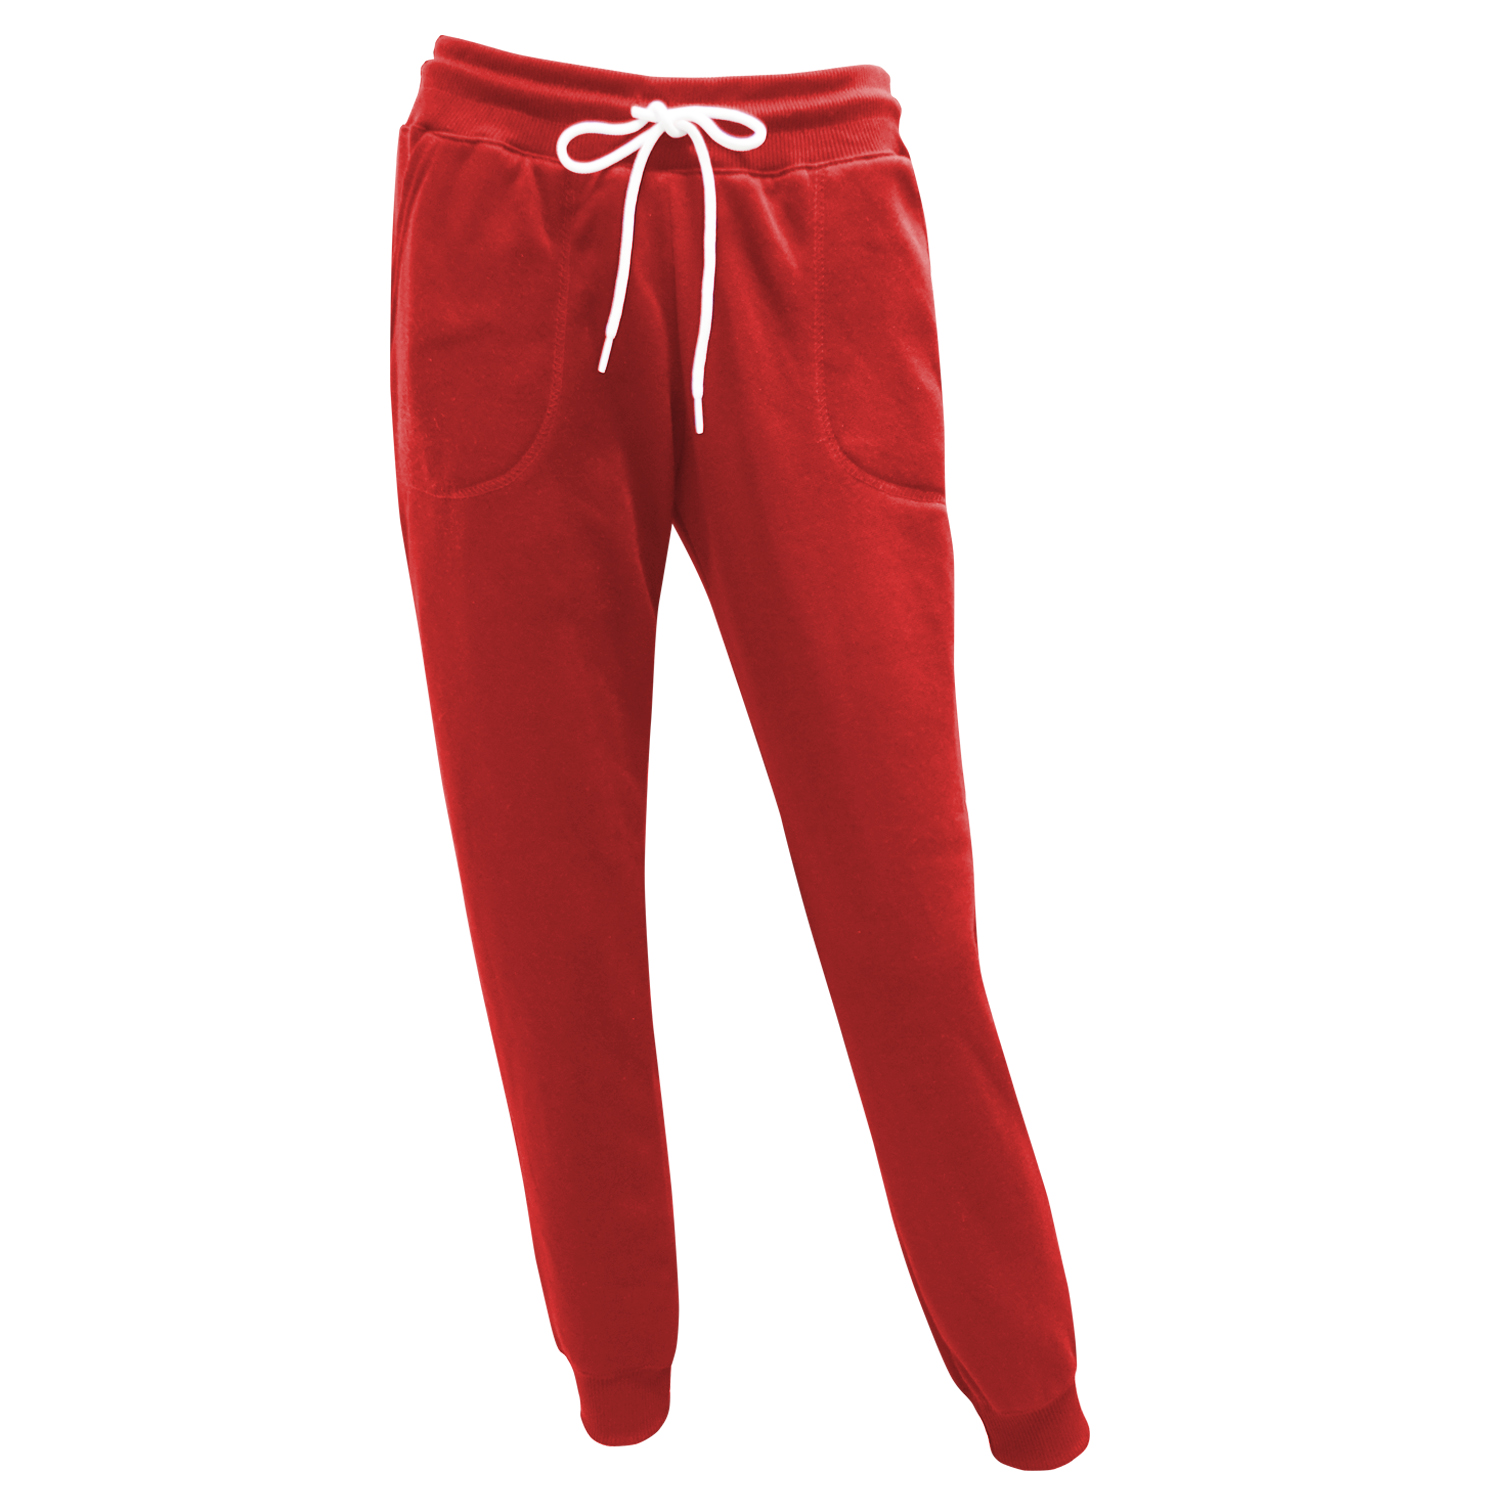 Womens Red Joggers & Sweatpants.